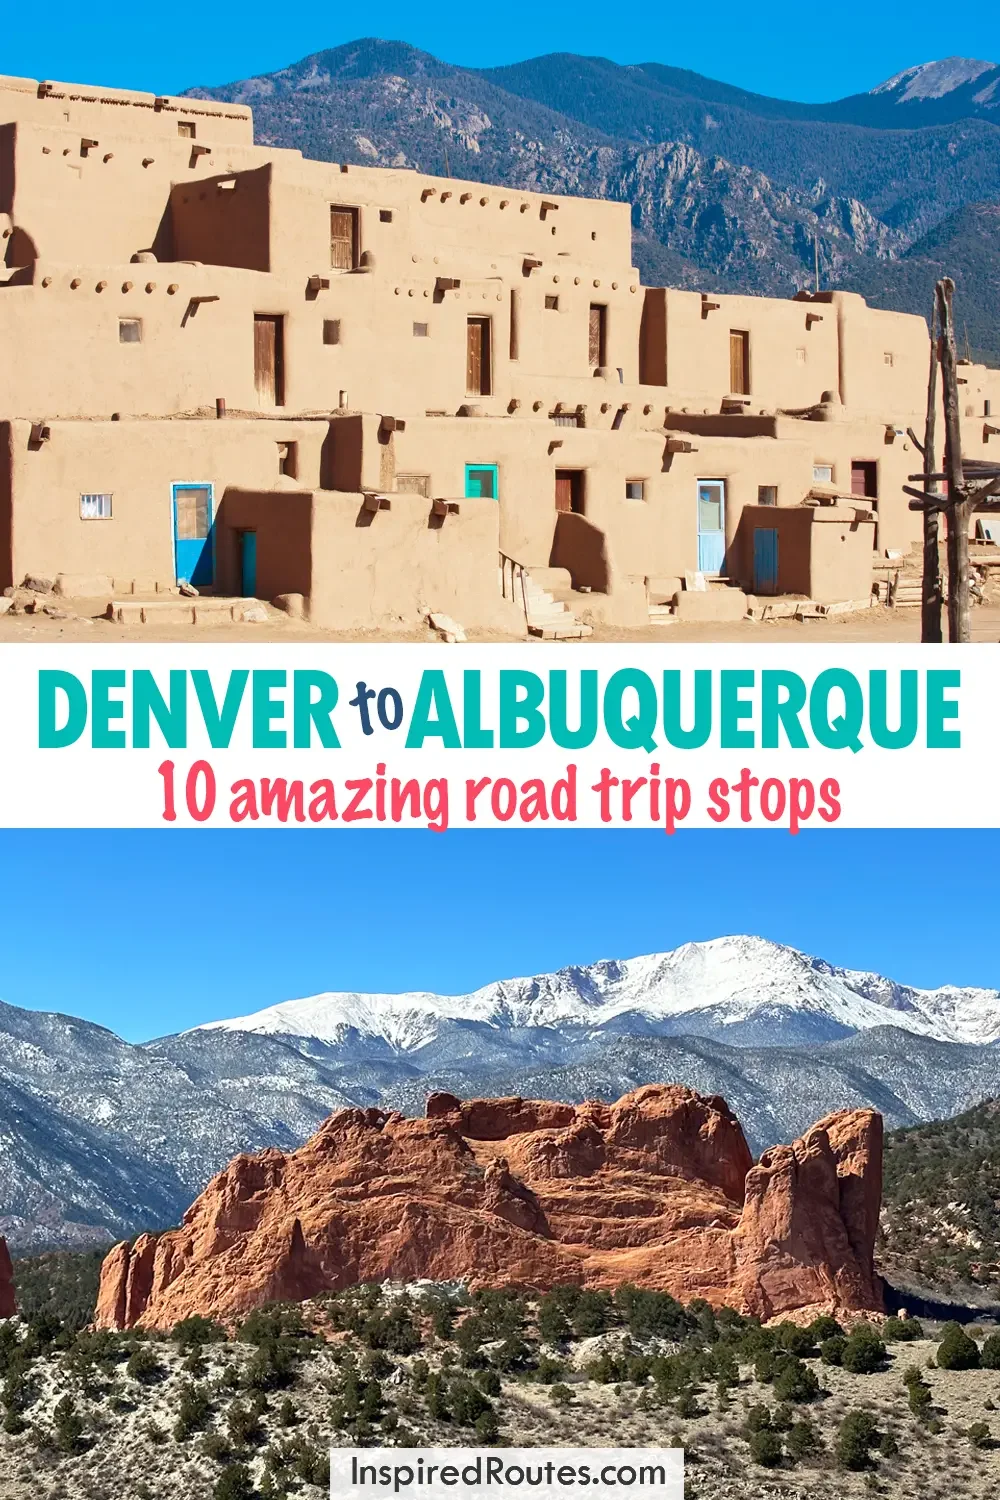 denver to Albuquerque 10 amazing road trip stops with photo of tan pueblos and mountain scenes